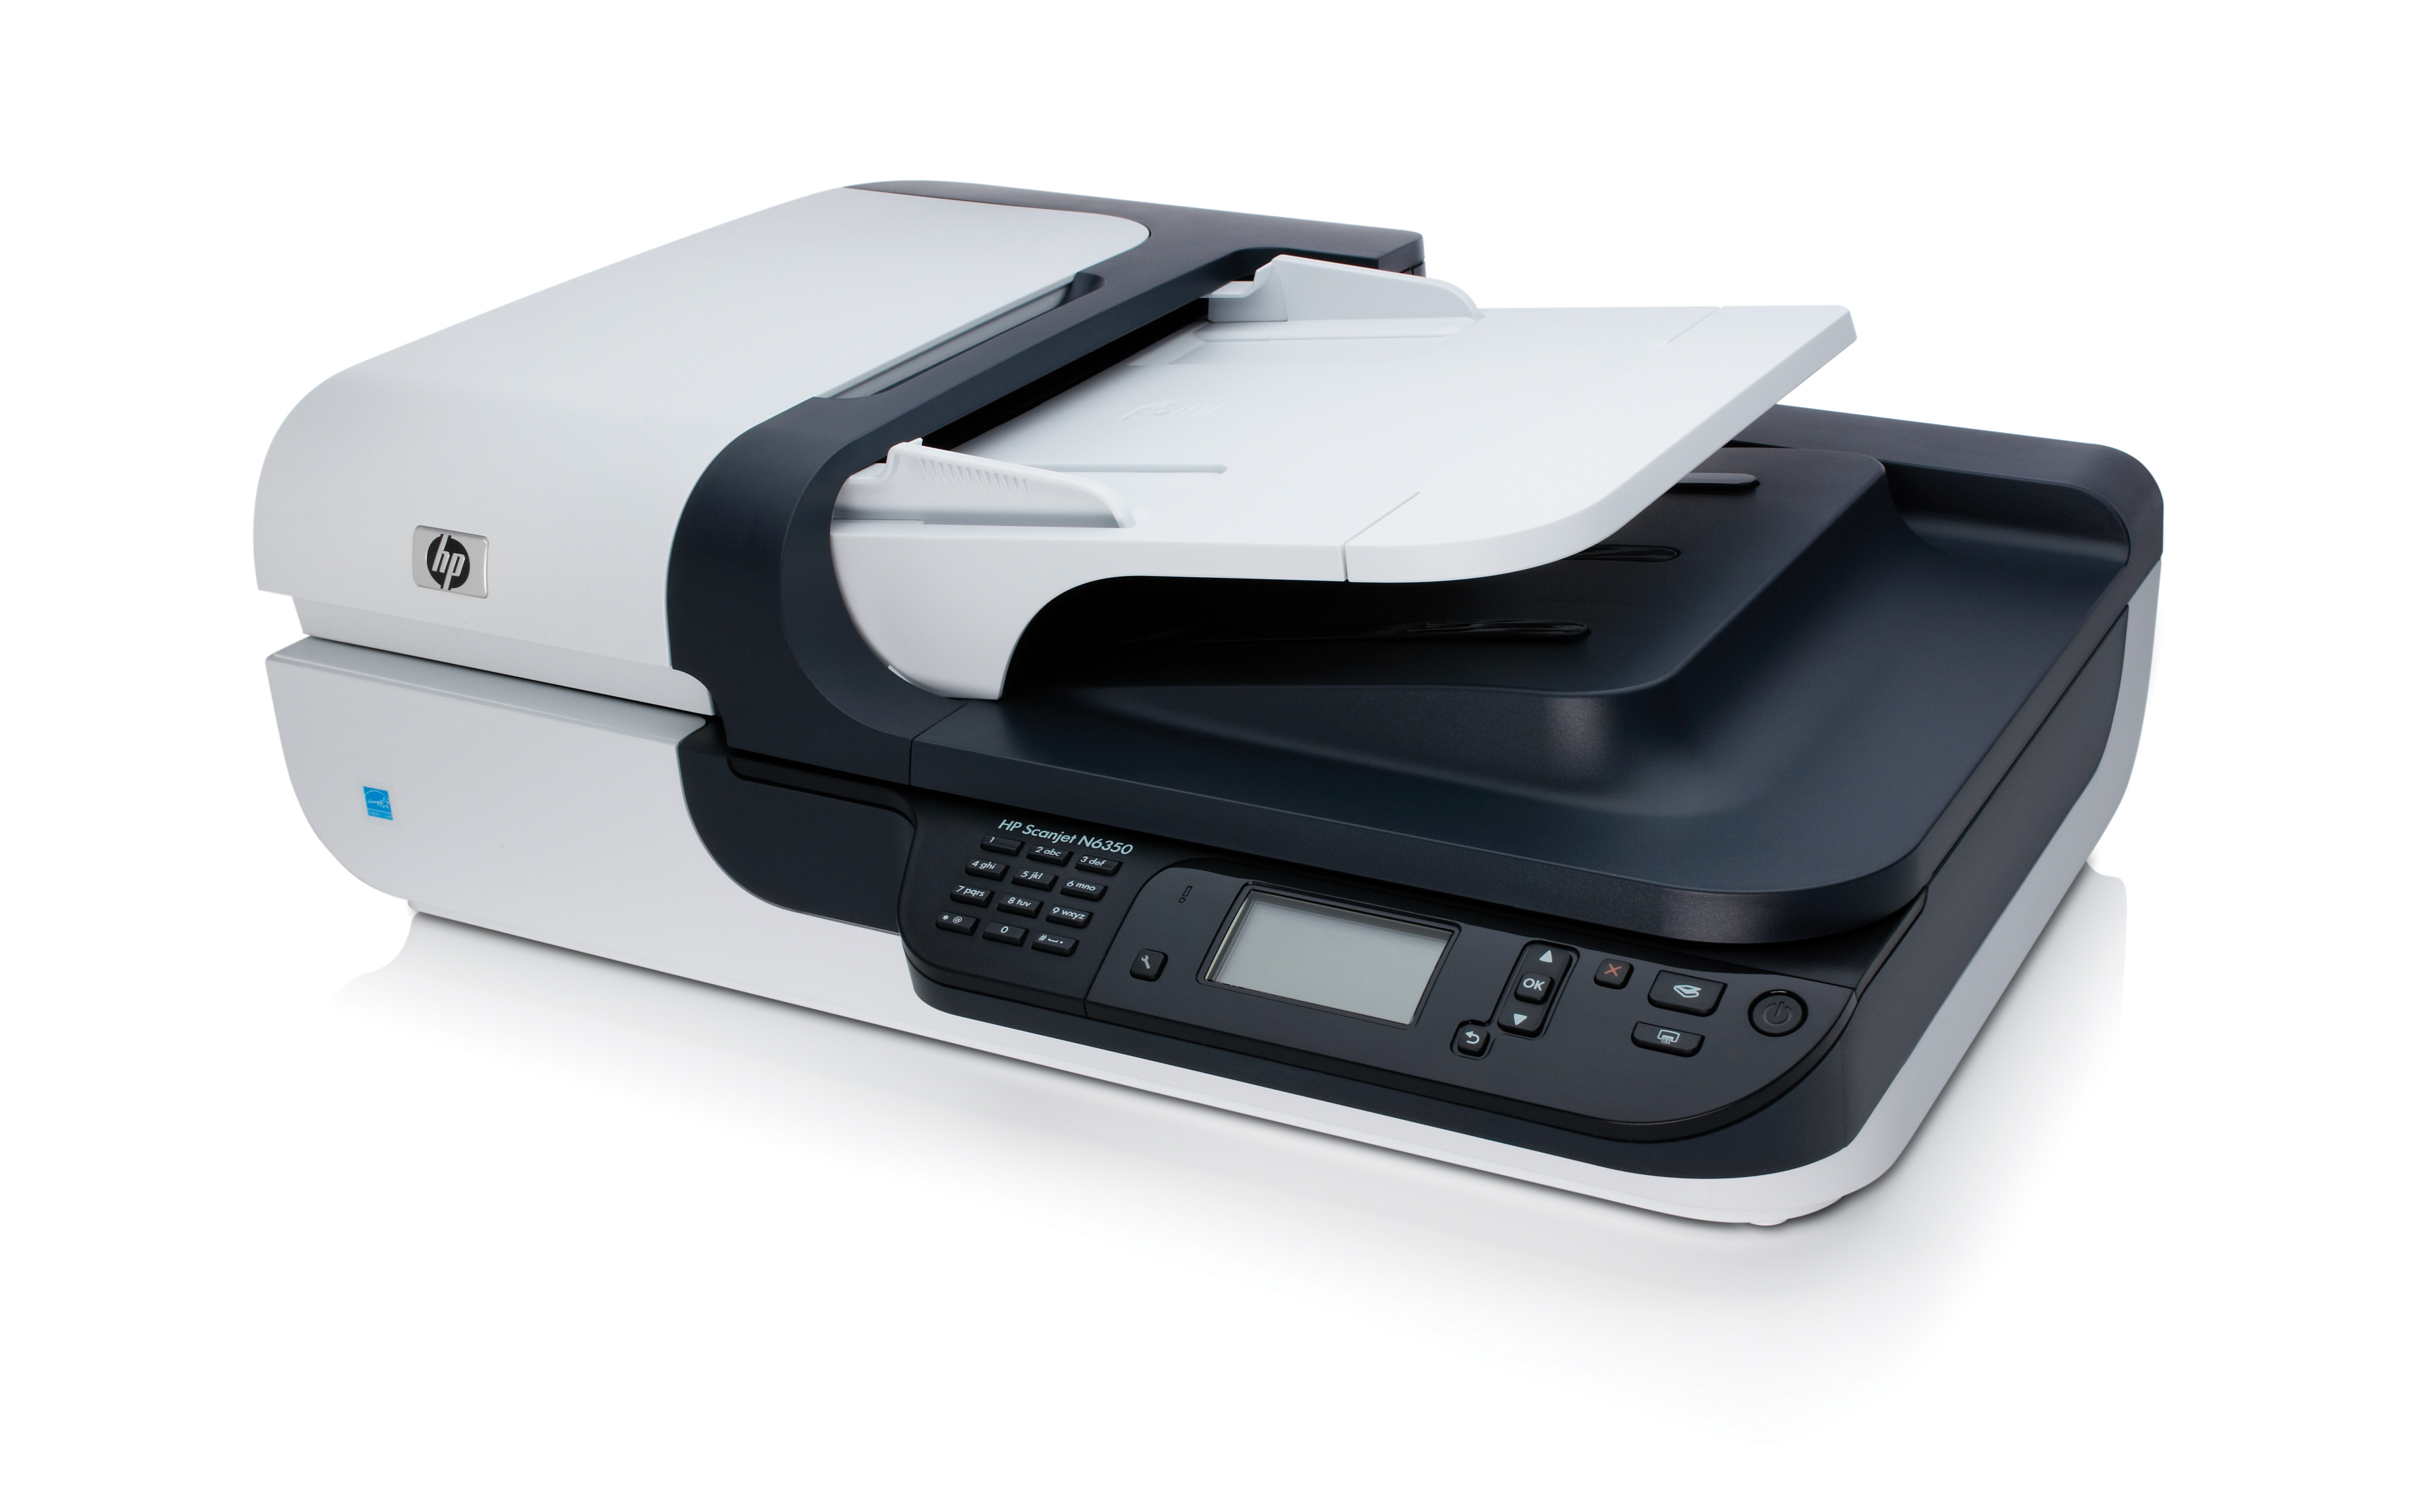 Máy scan HP N6350